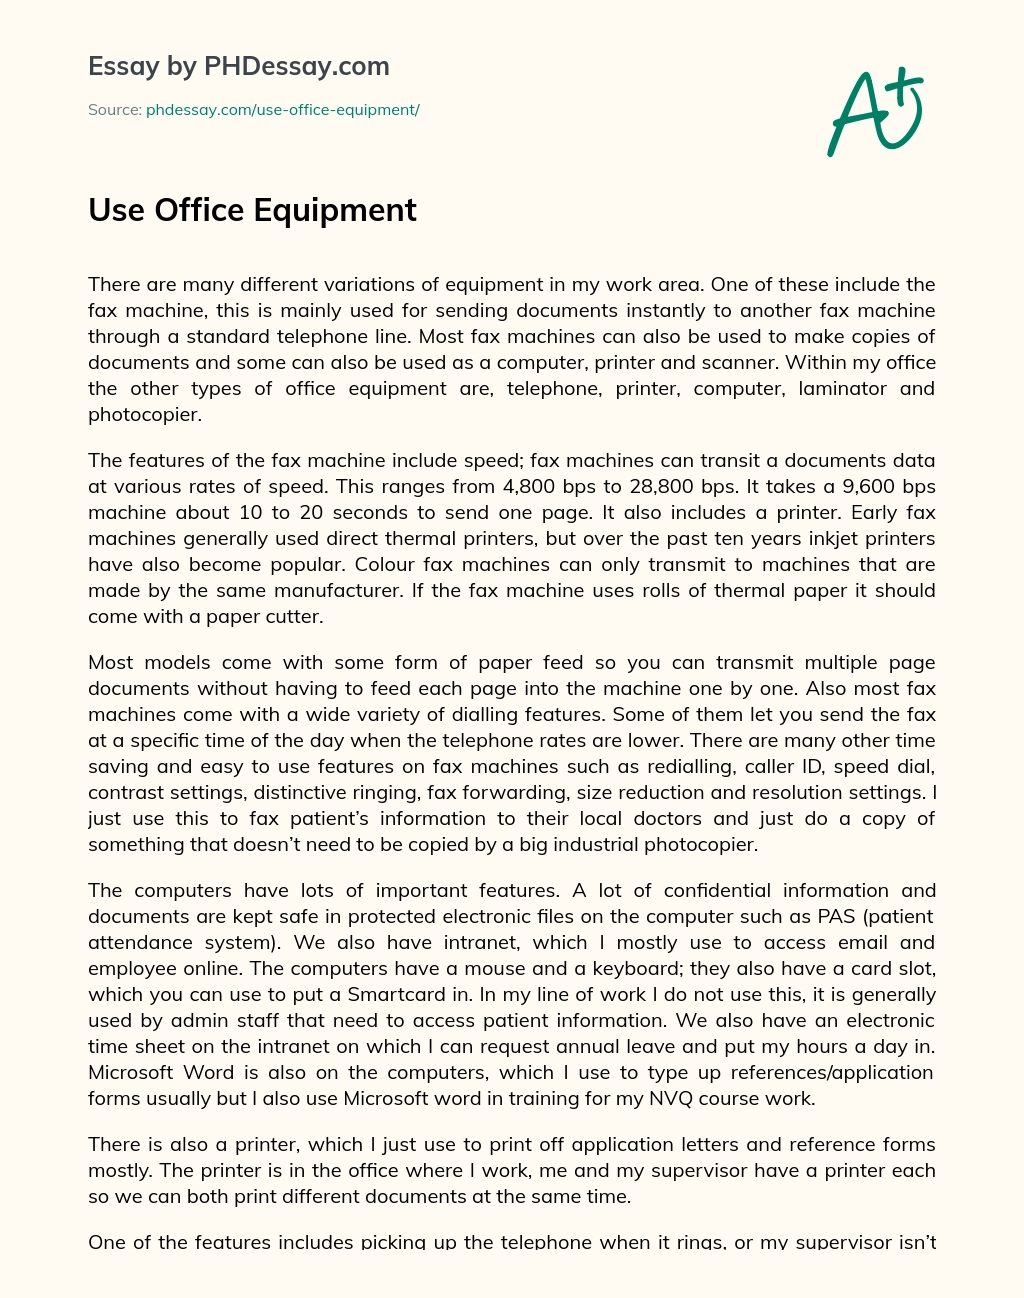 Use Office Equipment essay